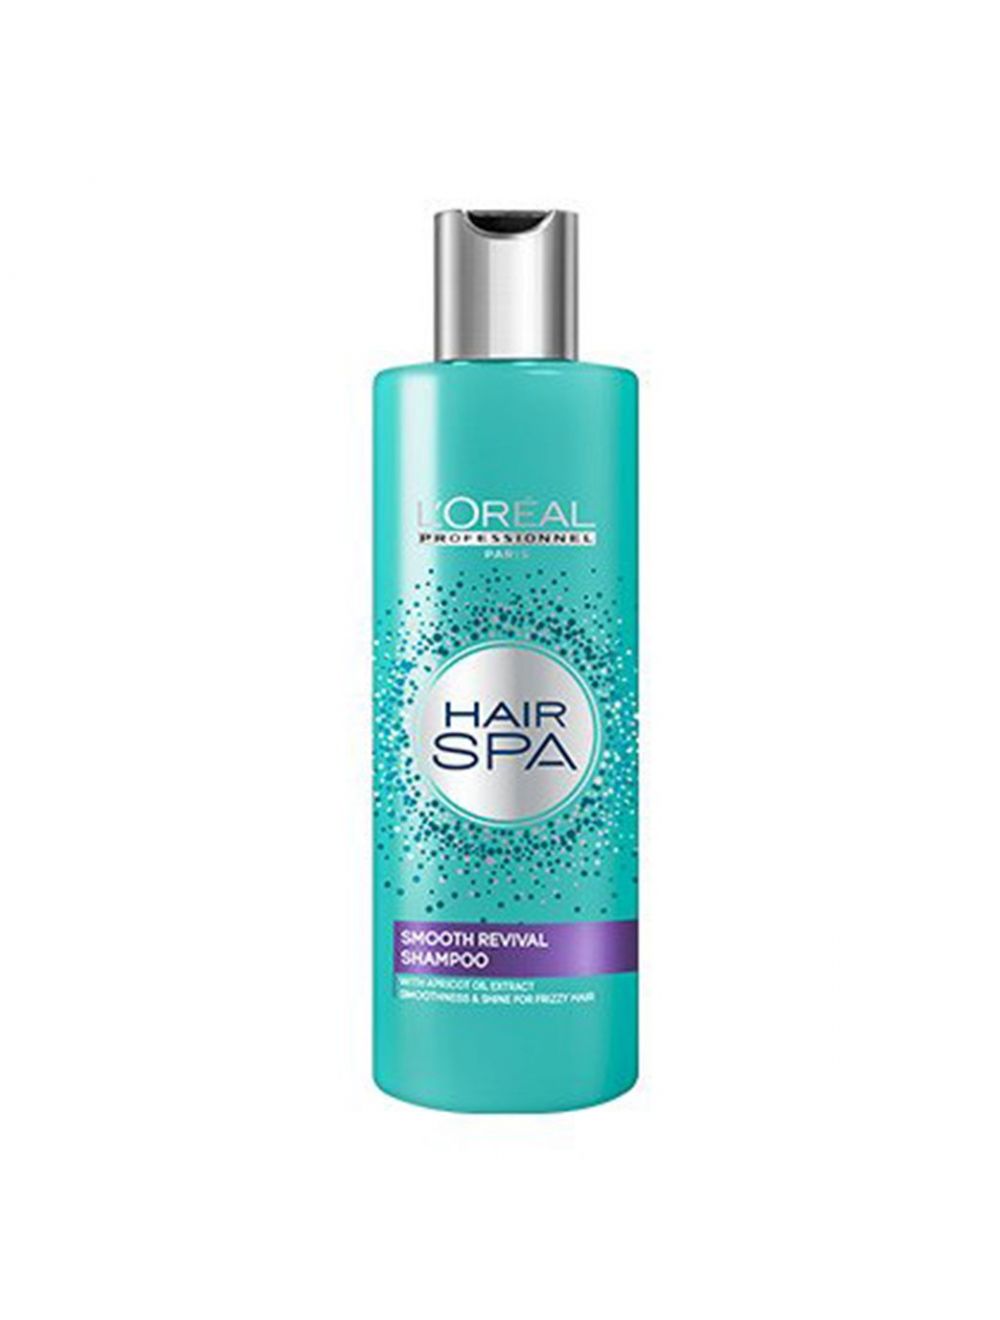 L'Oreal Professionnel Hair Spa Smooth Revival Shampoo (250ml)